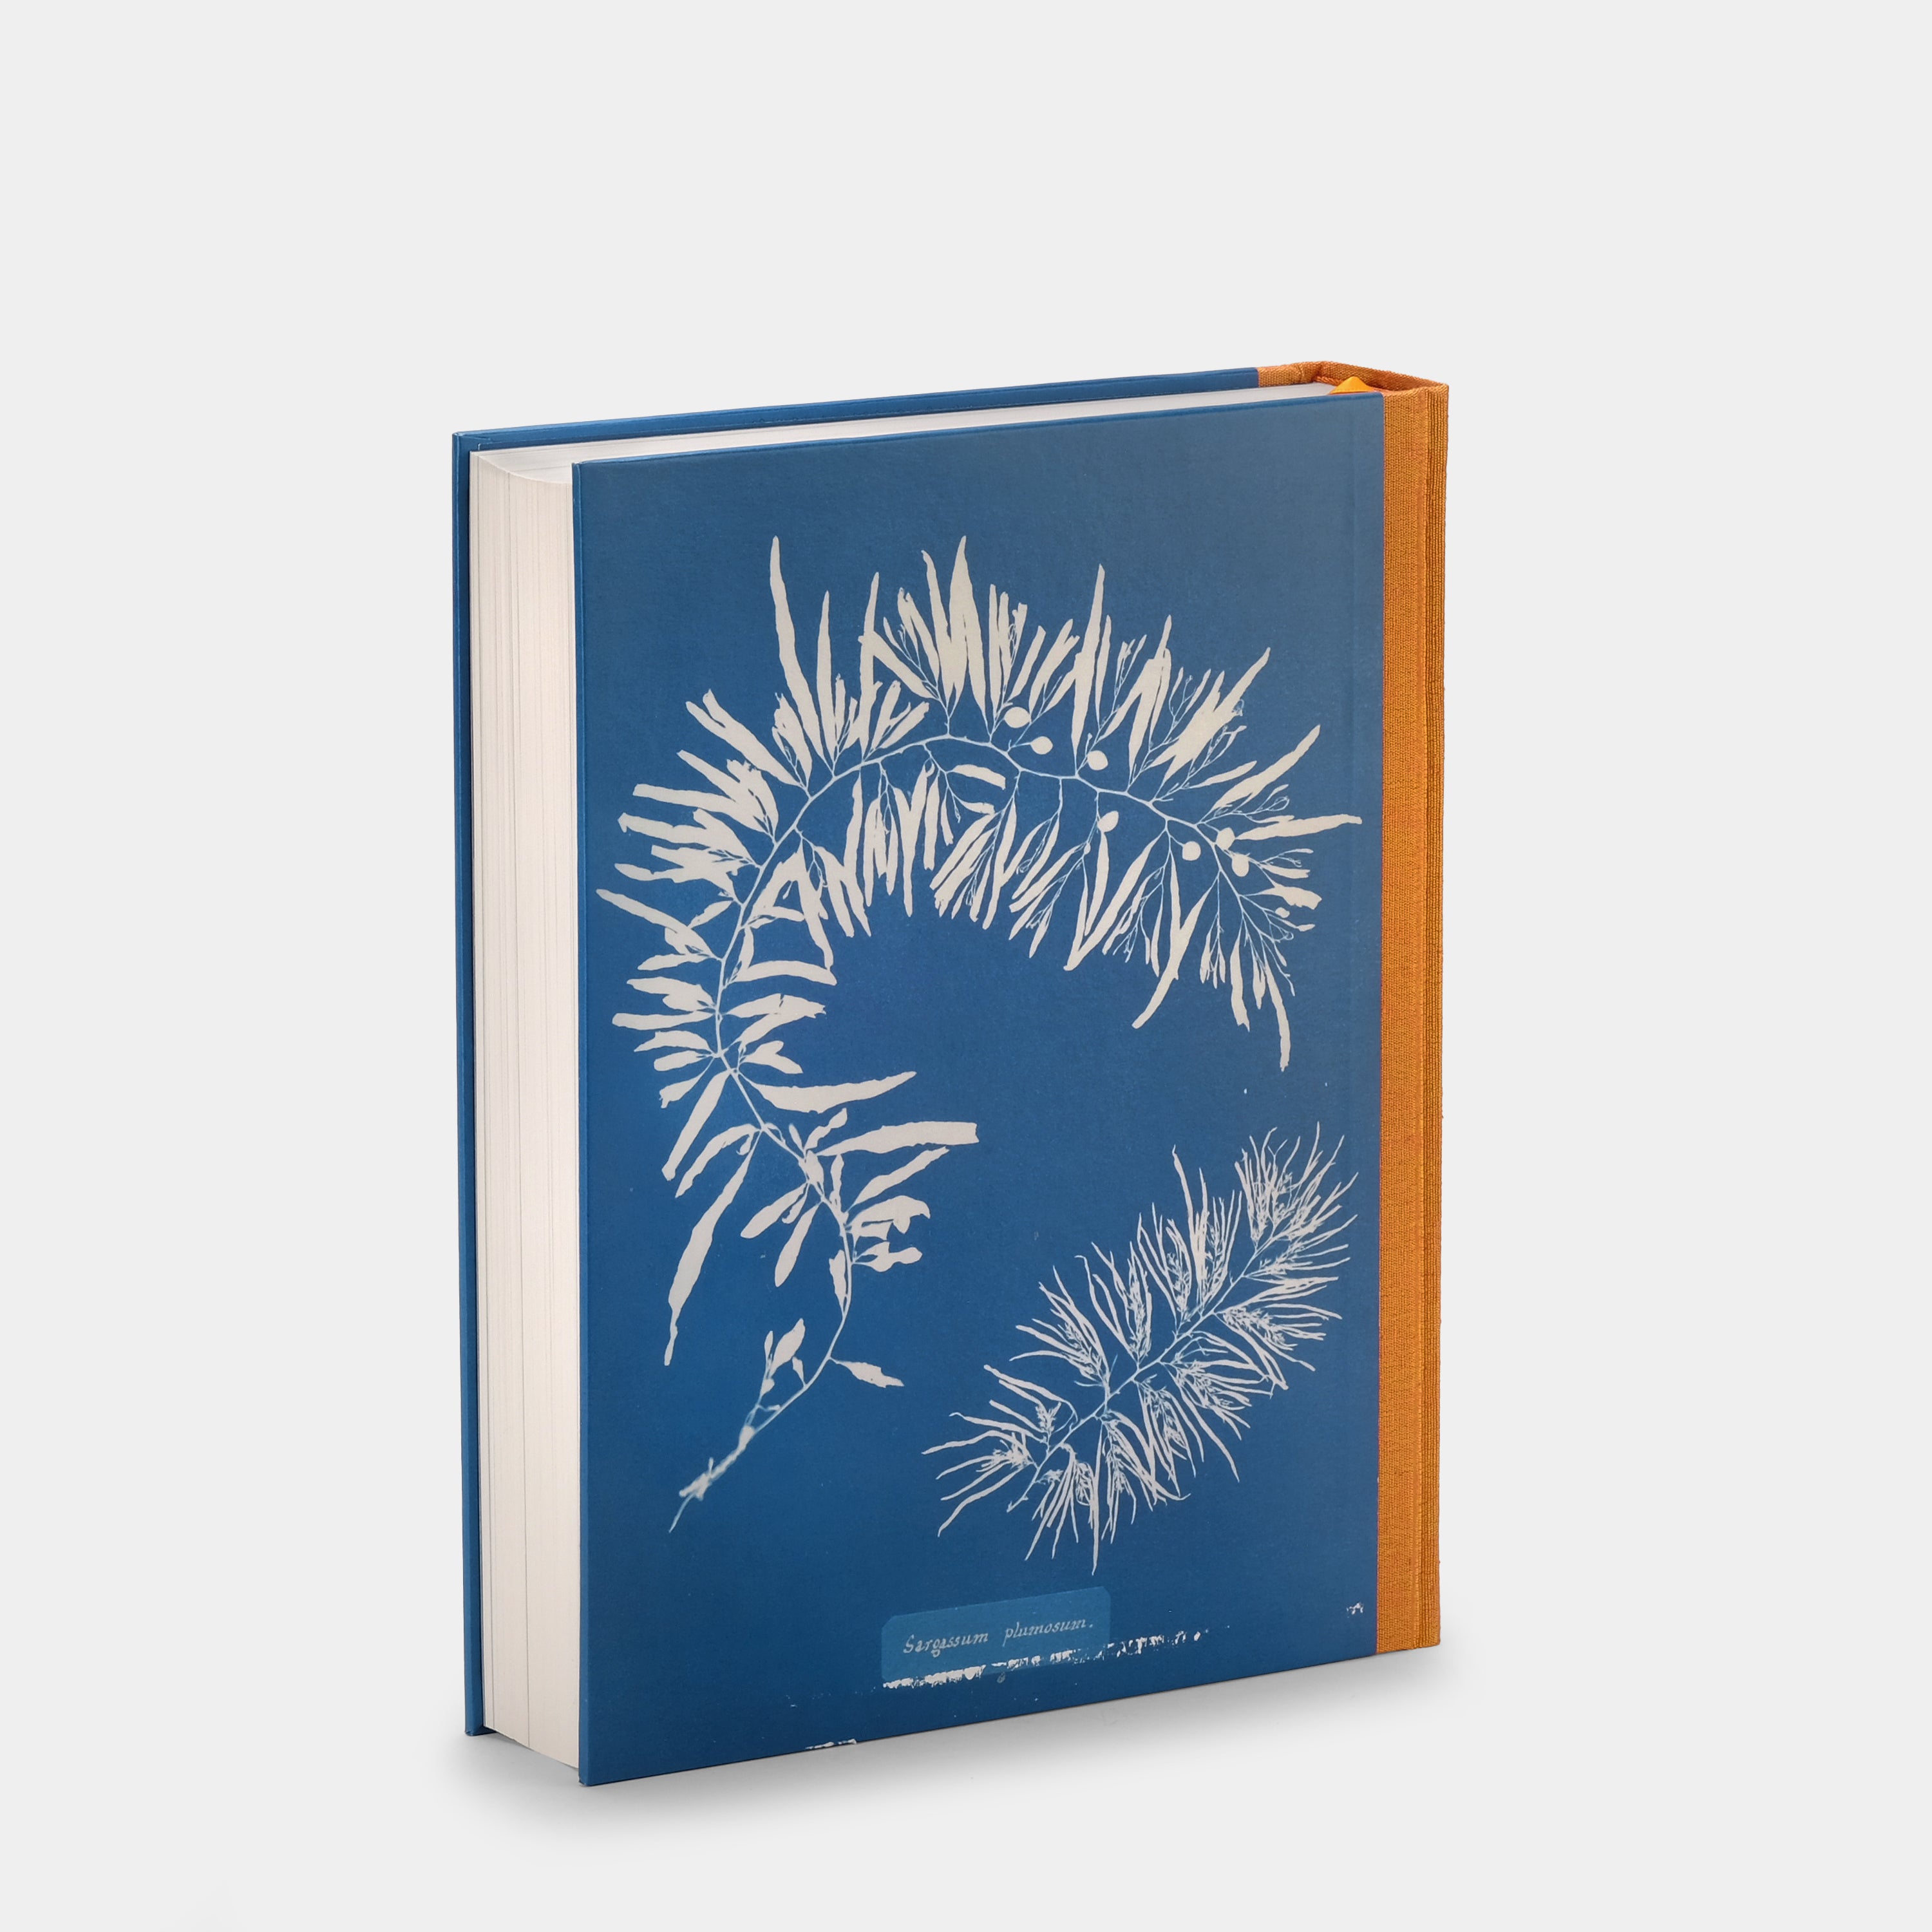 Éditions TASCHEN: Anna Atkins. Cyanotypes